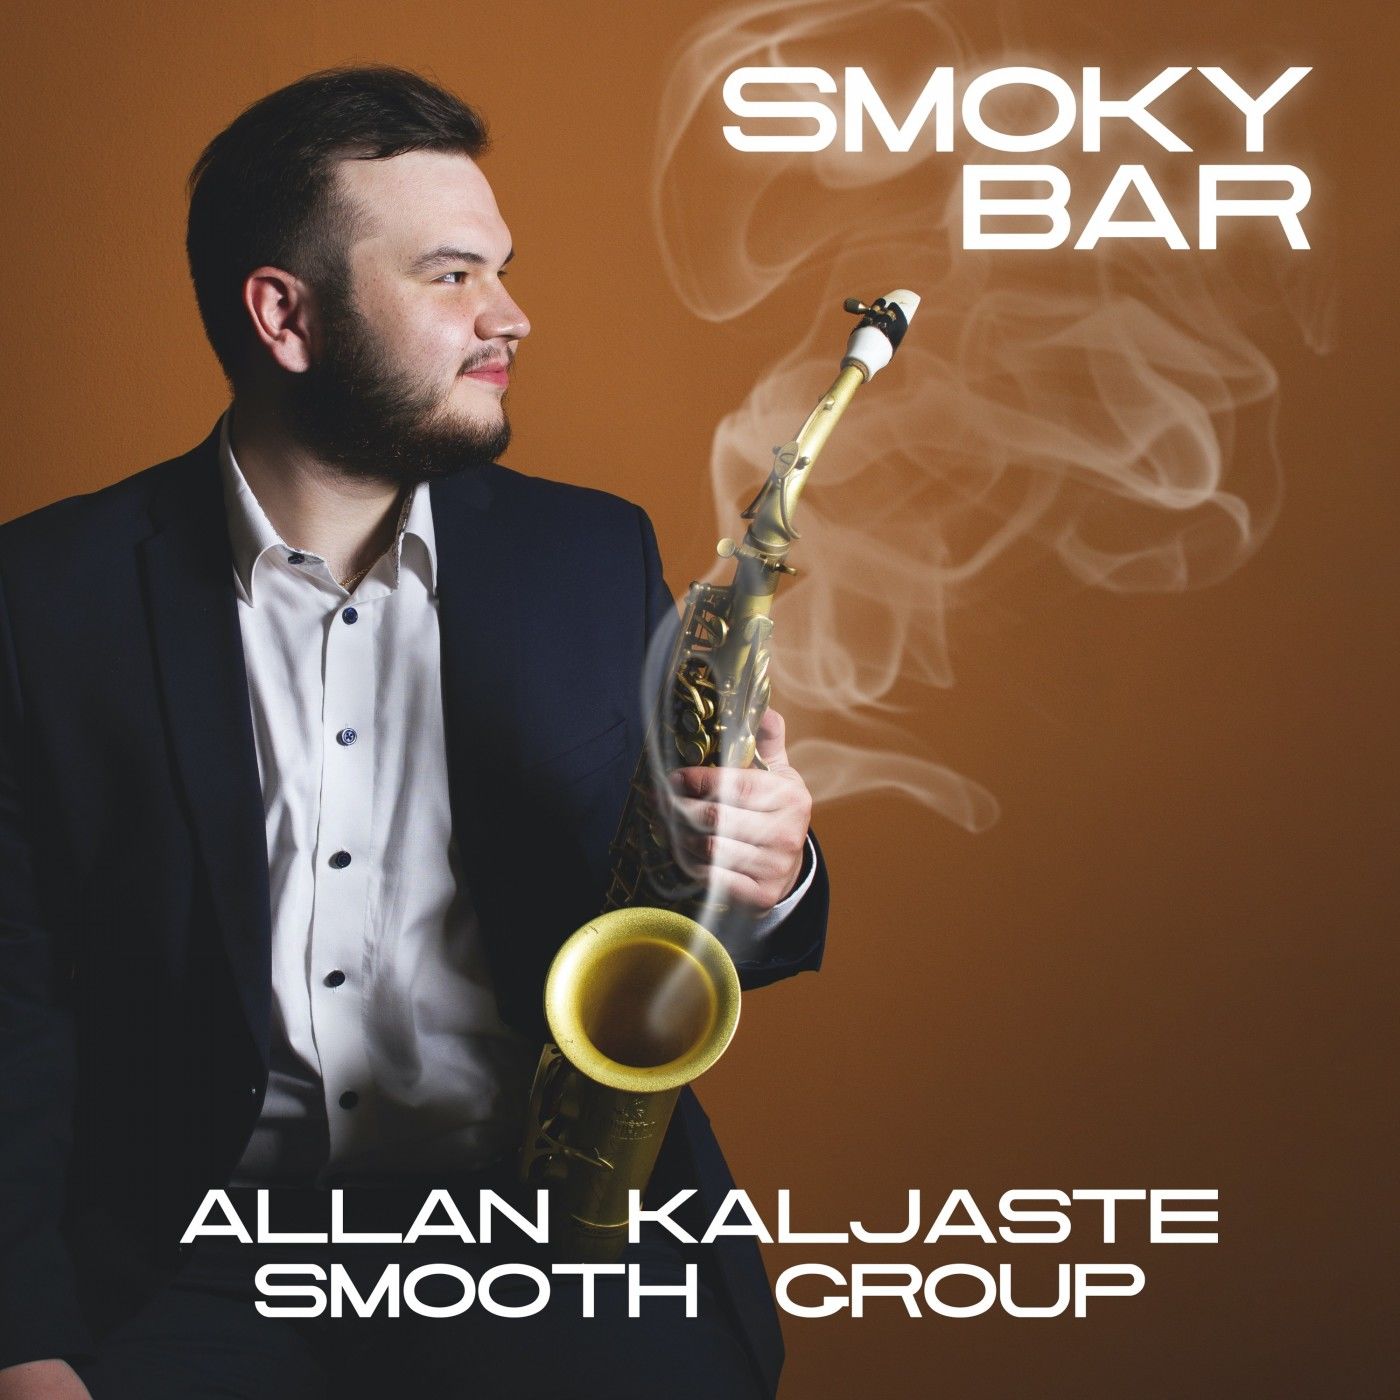 Allan Kaljaste Smooth Group – Smoky Bar (2020) [FLAC 24bit/48kHz]